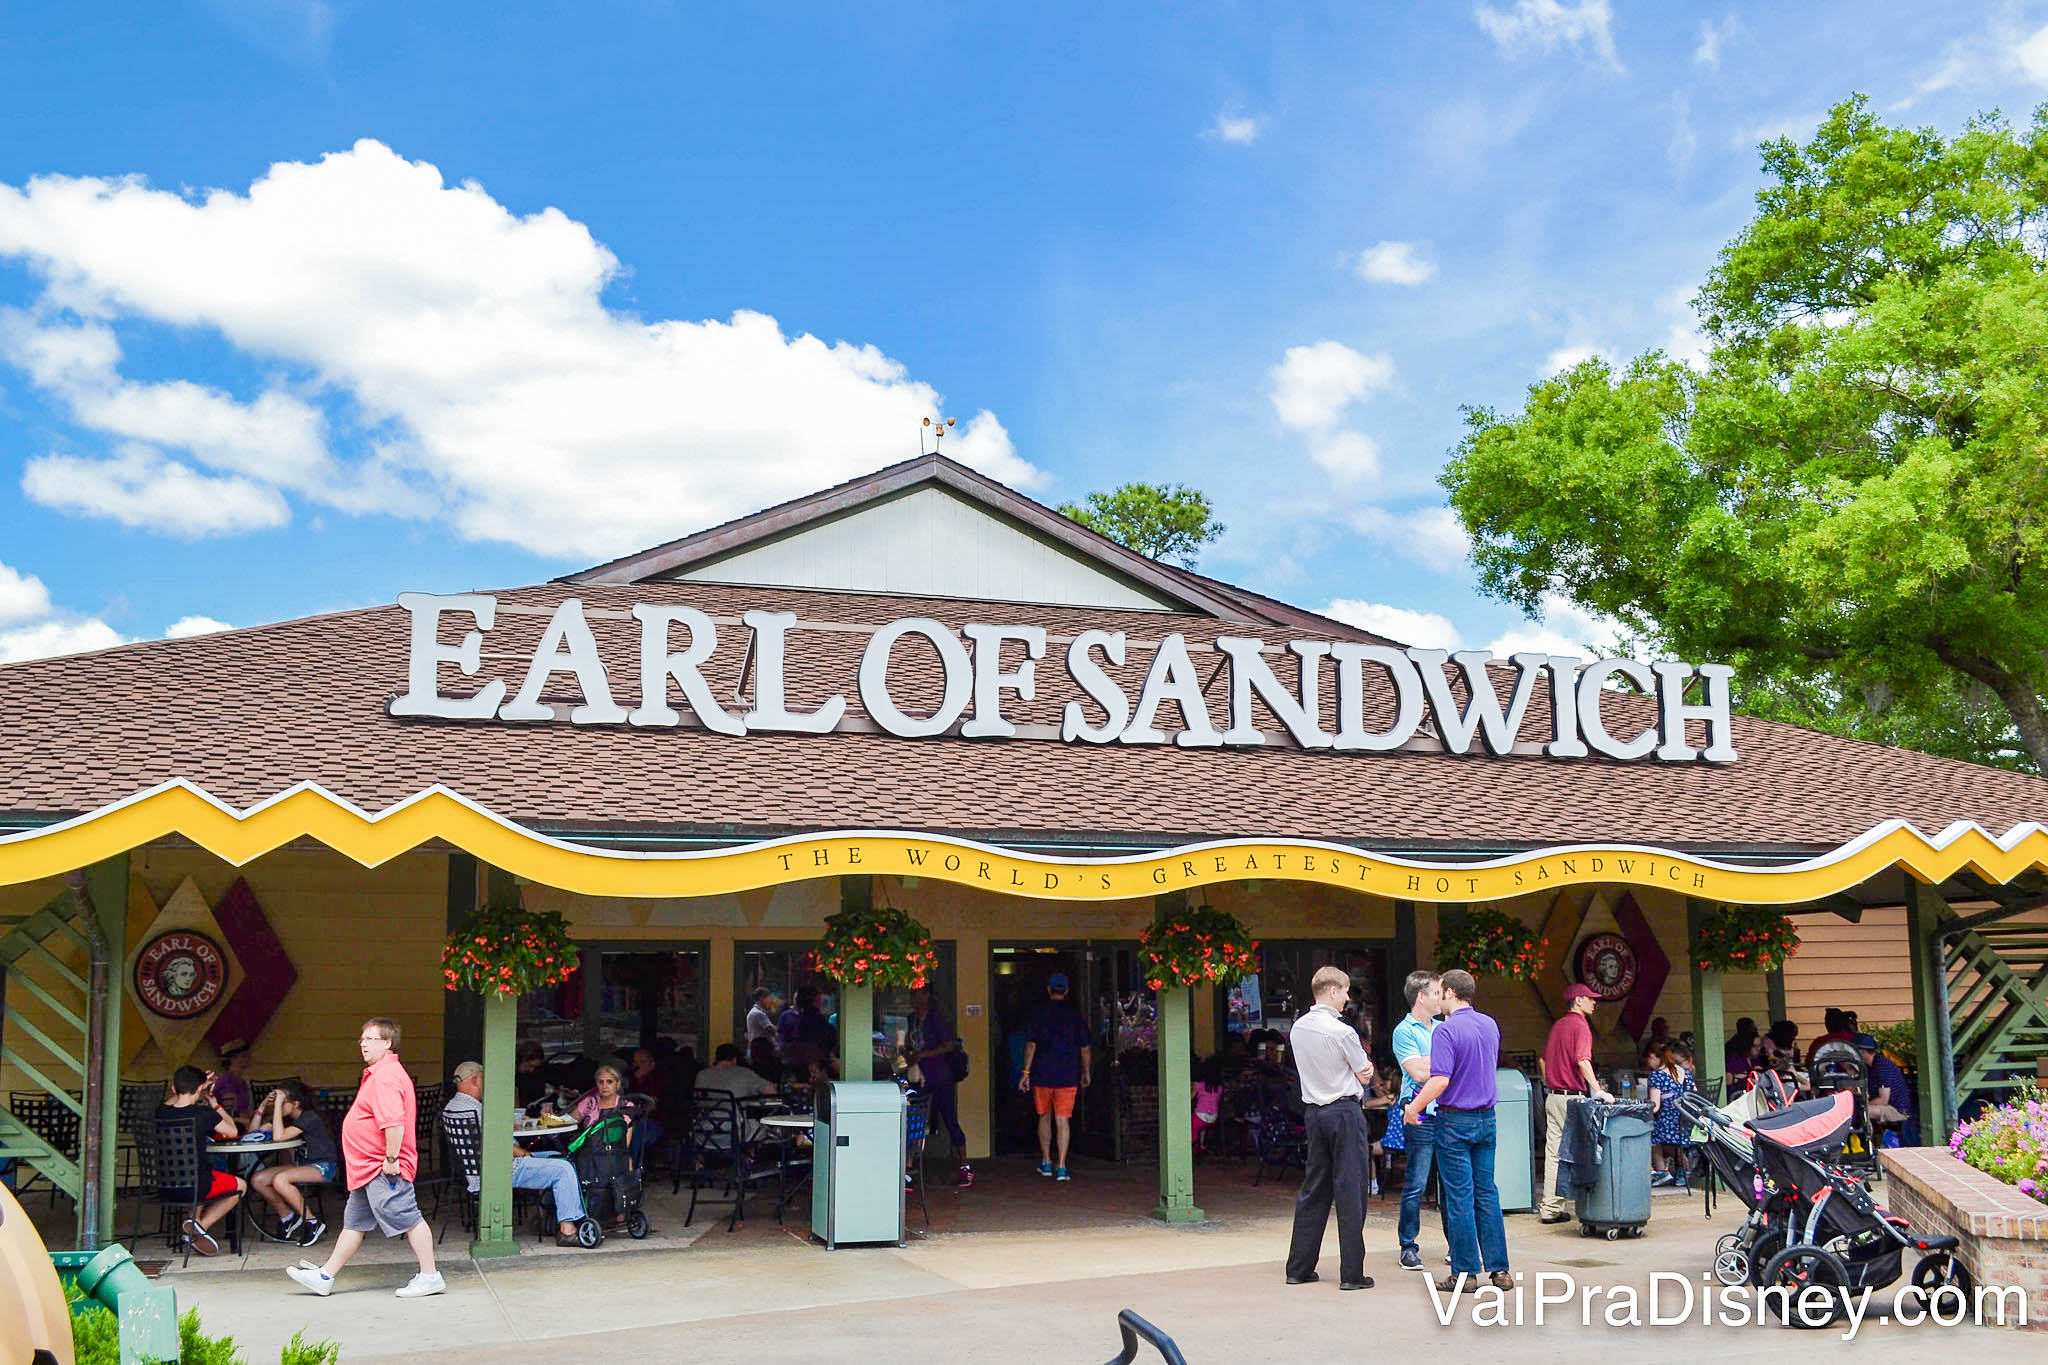 Adoro o Earl of Sandwich. Um restaurante super gostoso e barato!